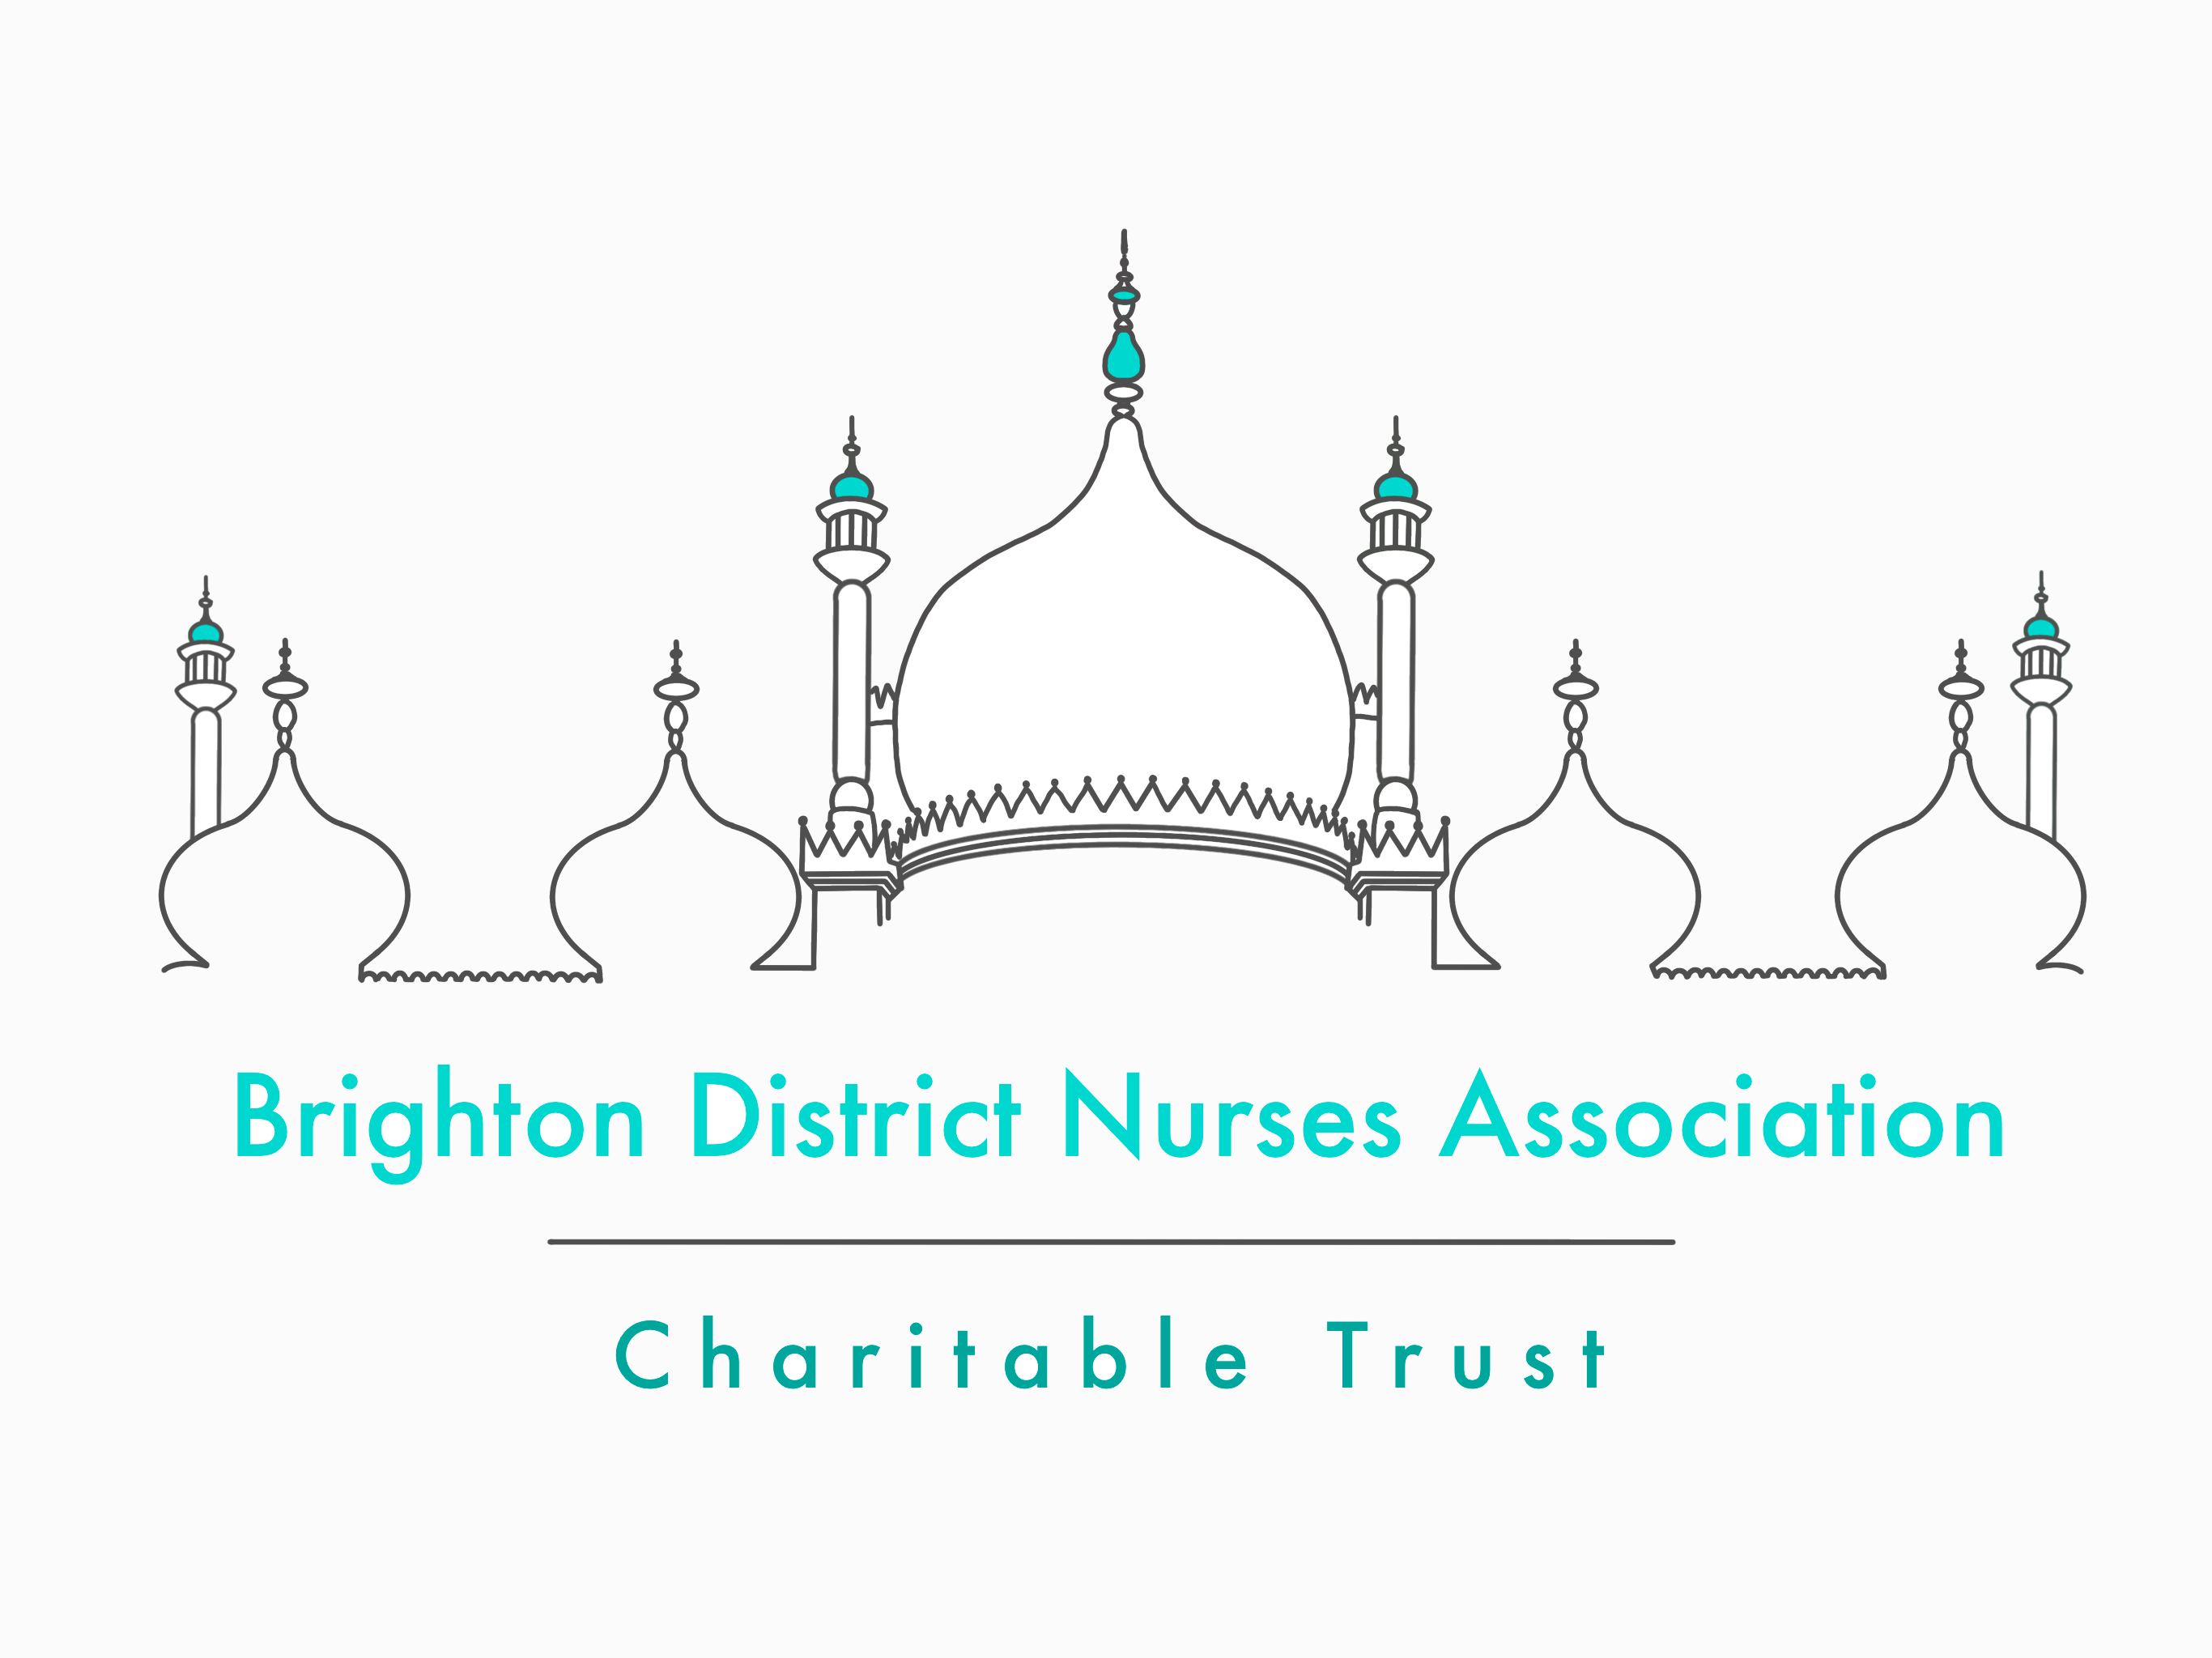 The Brighton District Nursing Association Trust